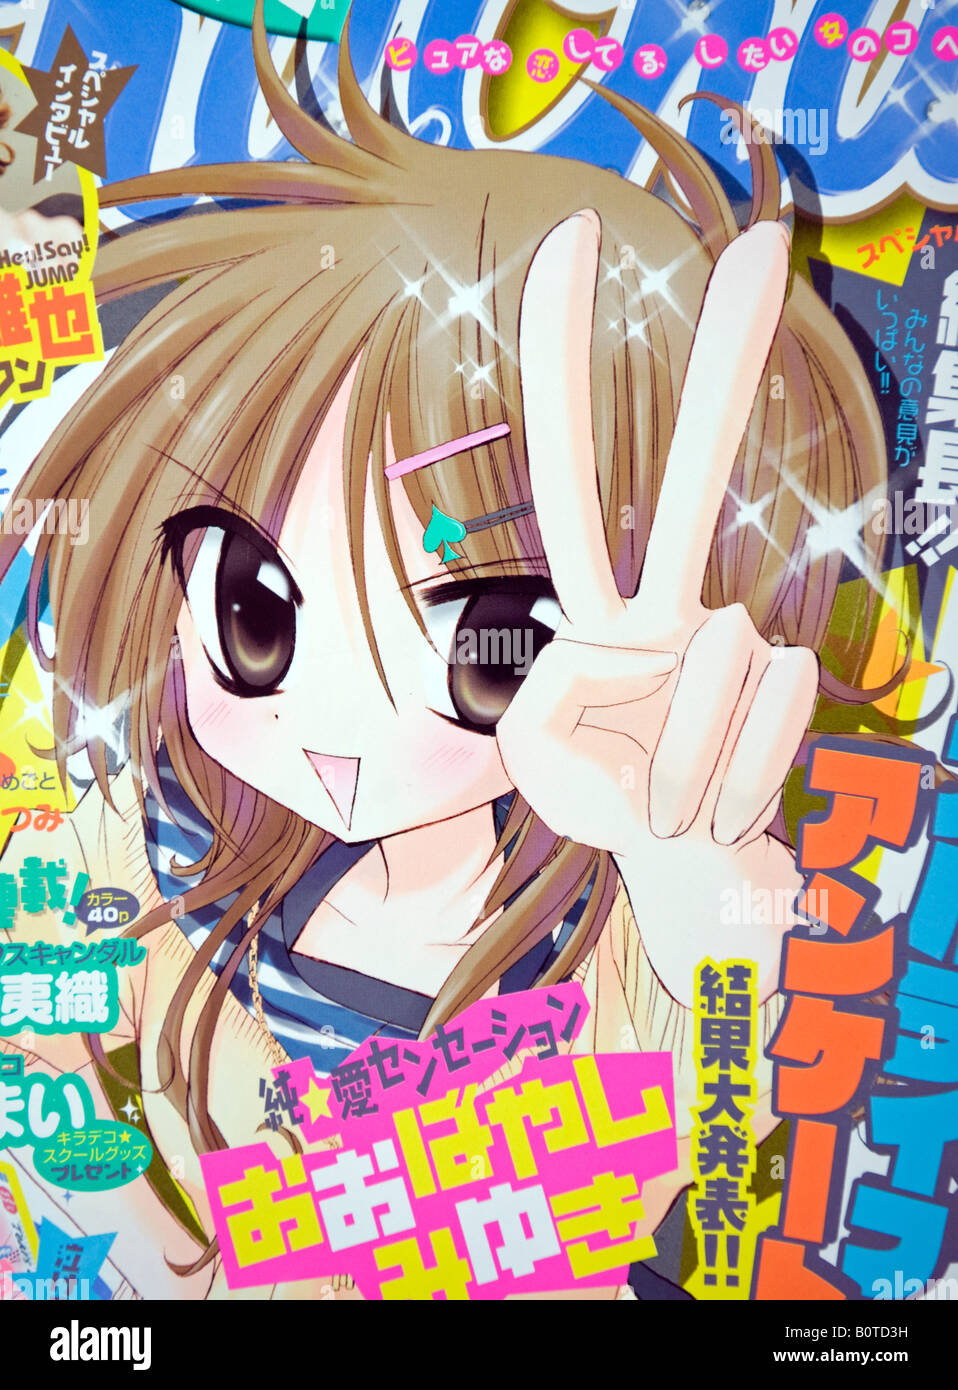 Cover artwork del manga giapponese comic book in Giappone 2006 Foto Stock